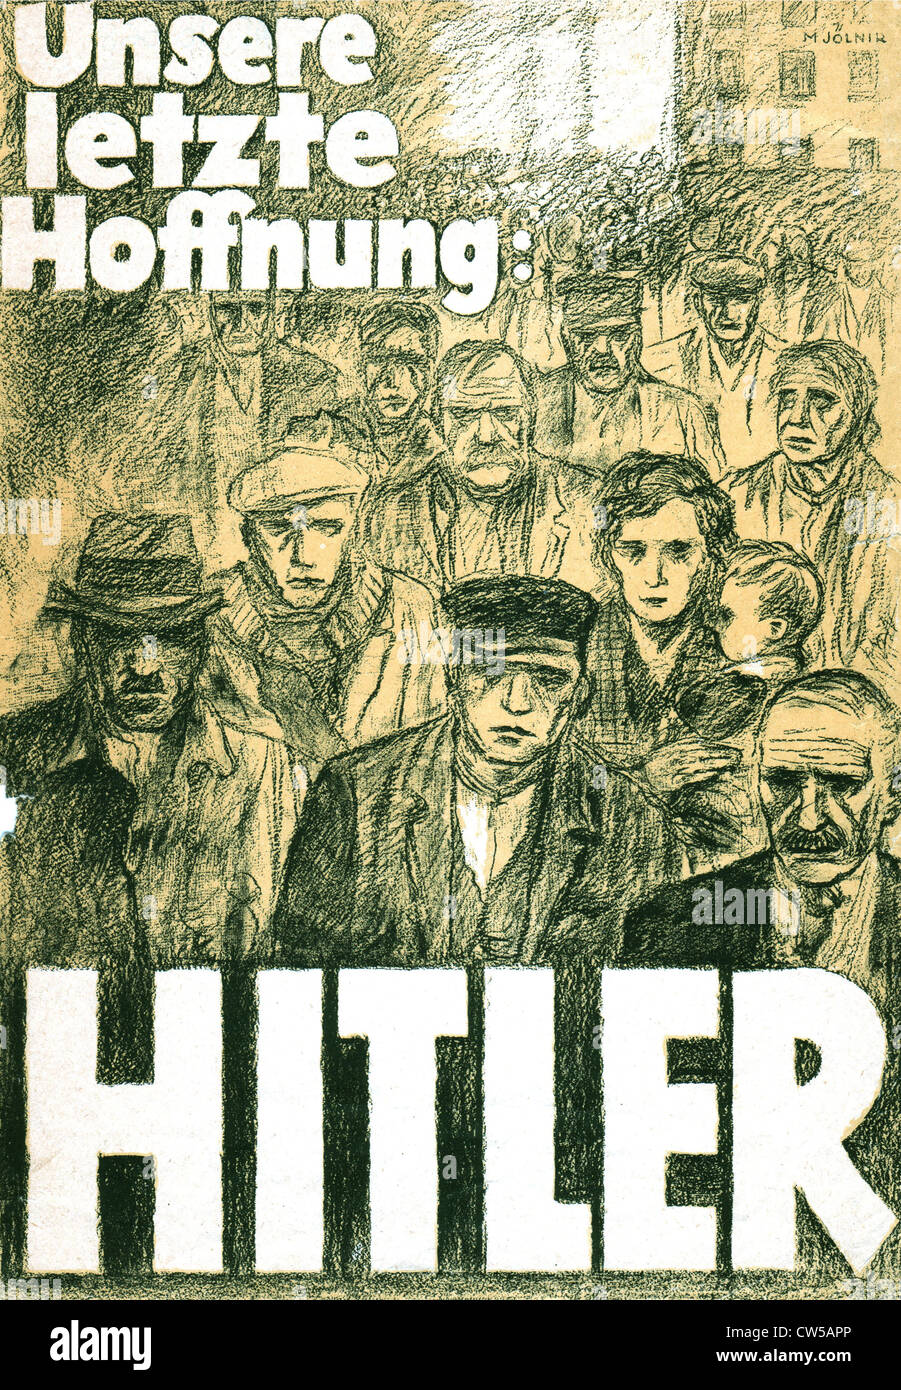 Propagand Nazi poster : 'Notre dernier espoir : Hitler" Banque D'Images